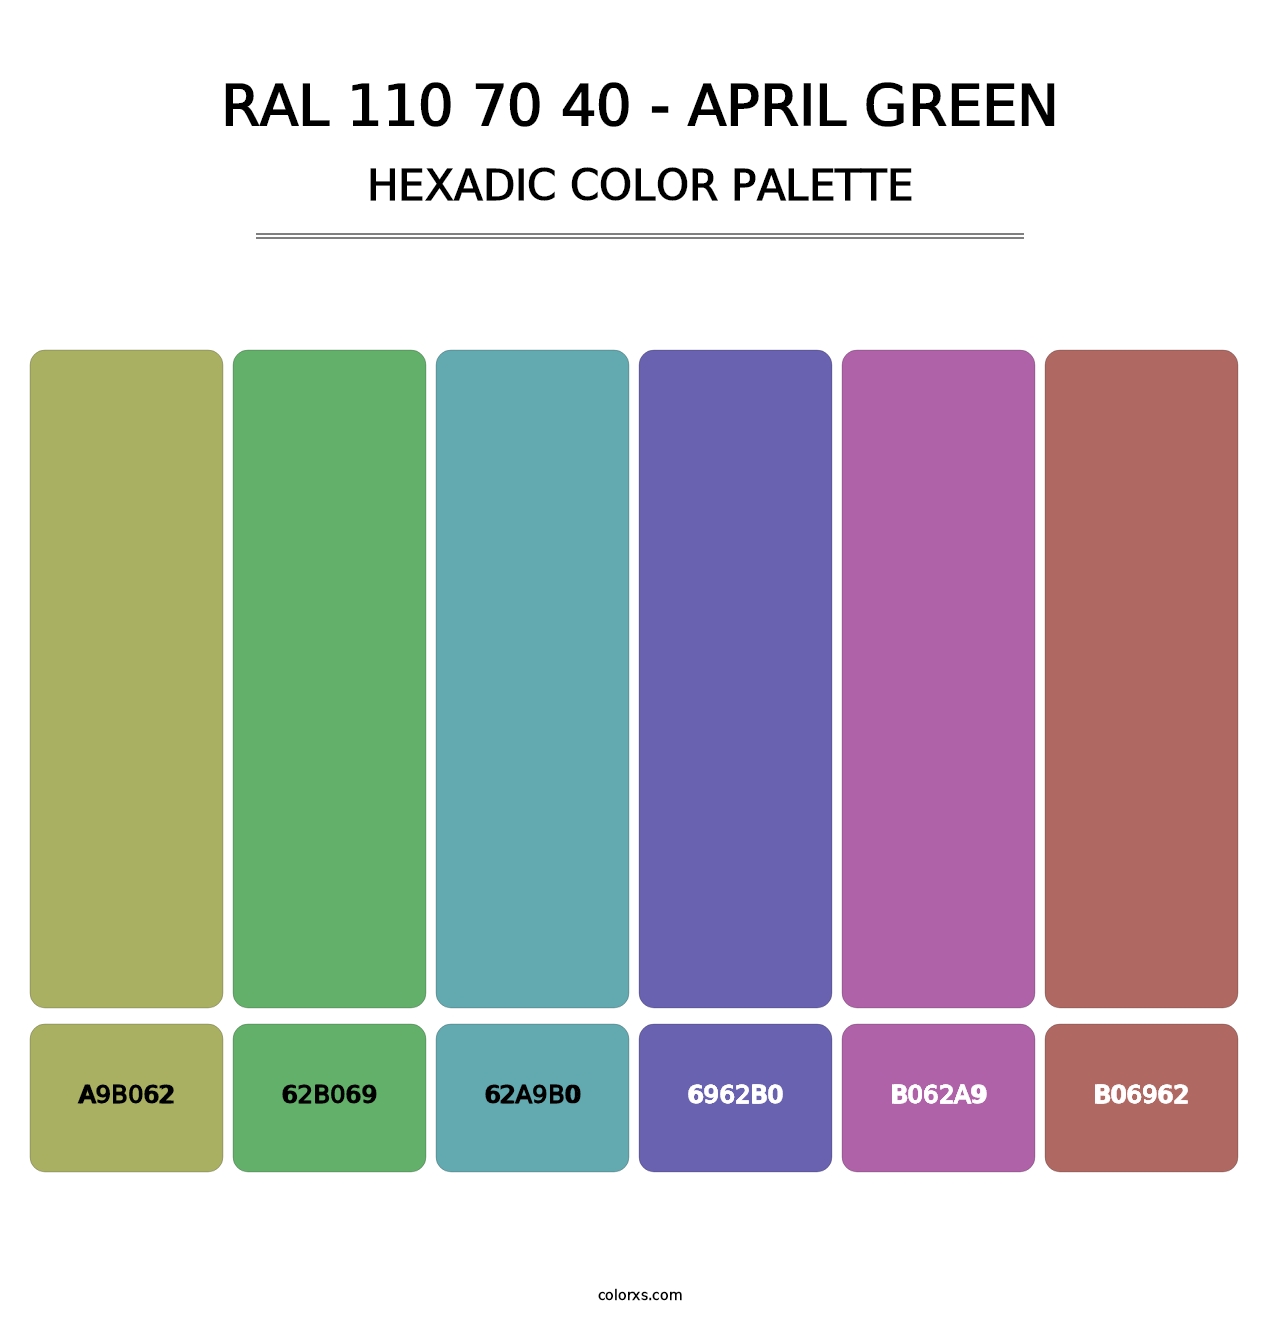 RAL 110 70 40 - April Green - Hexadic Color Palette